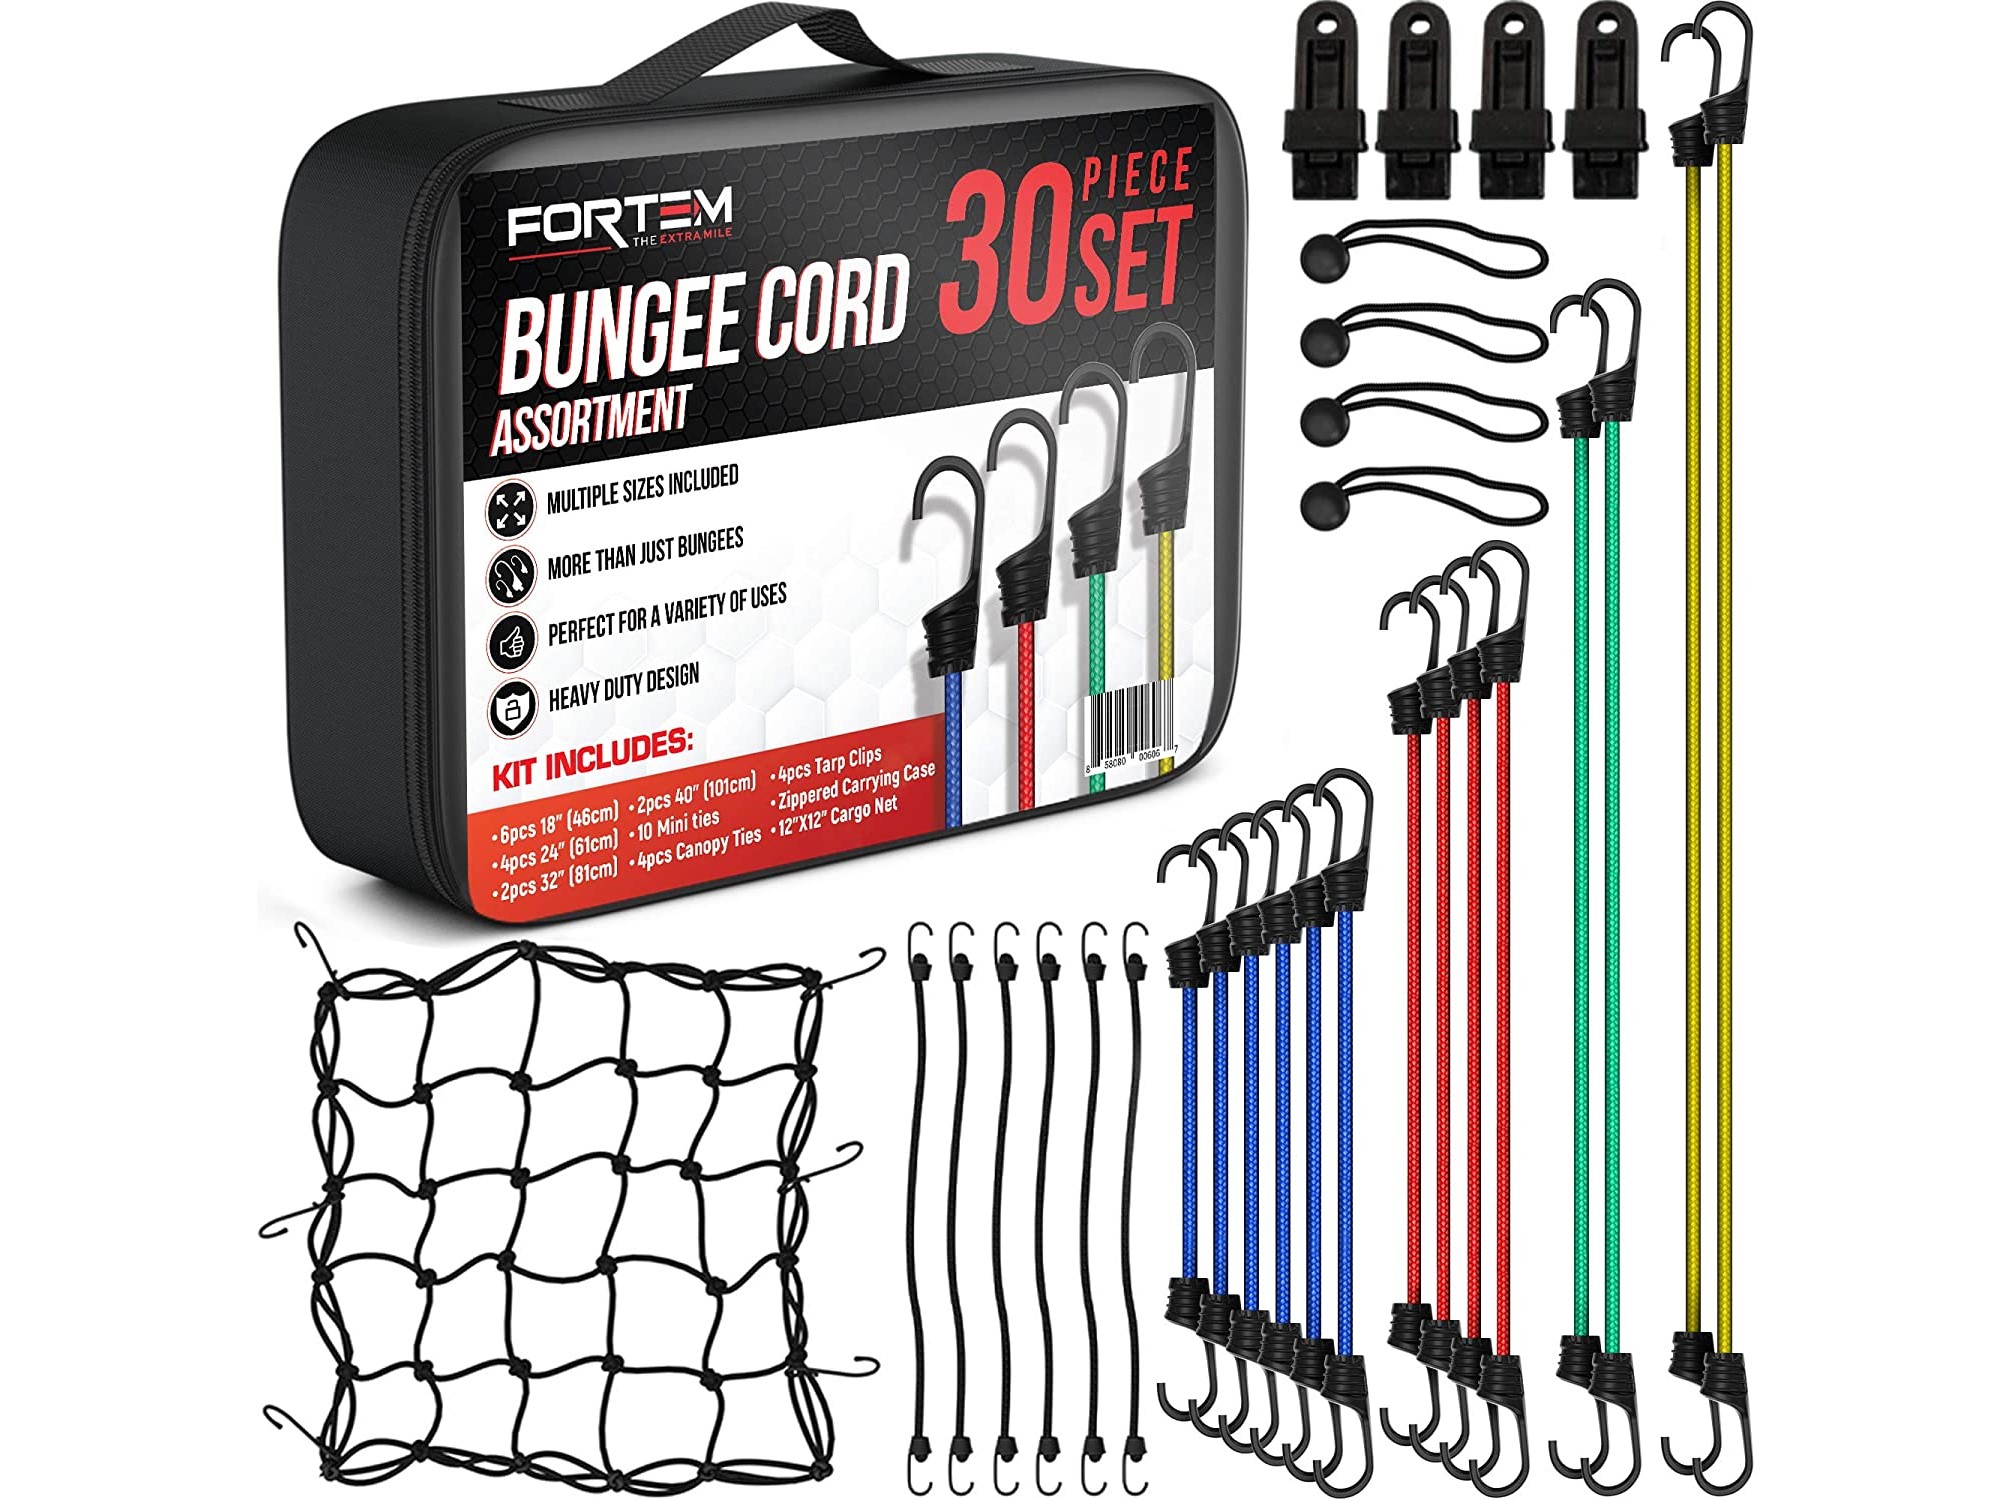 Fortem Bungee Cord 30 Pc Set